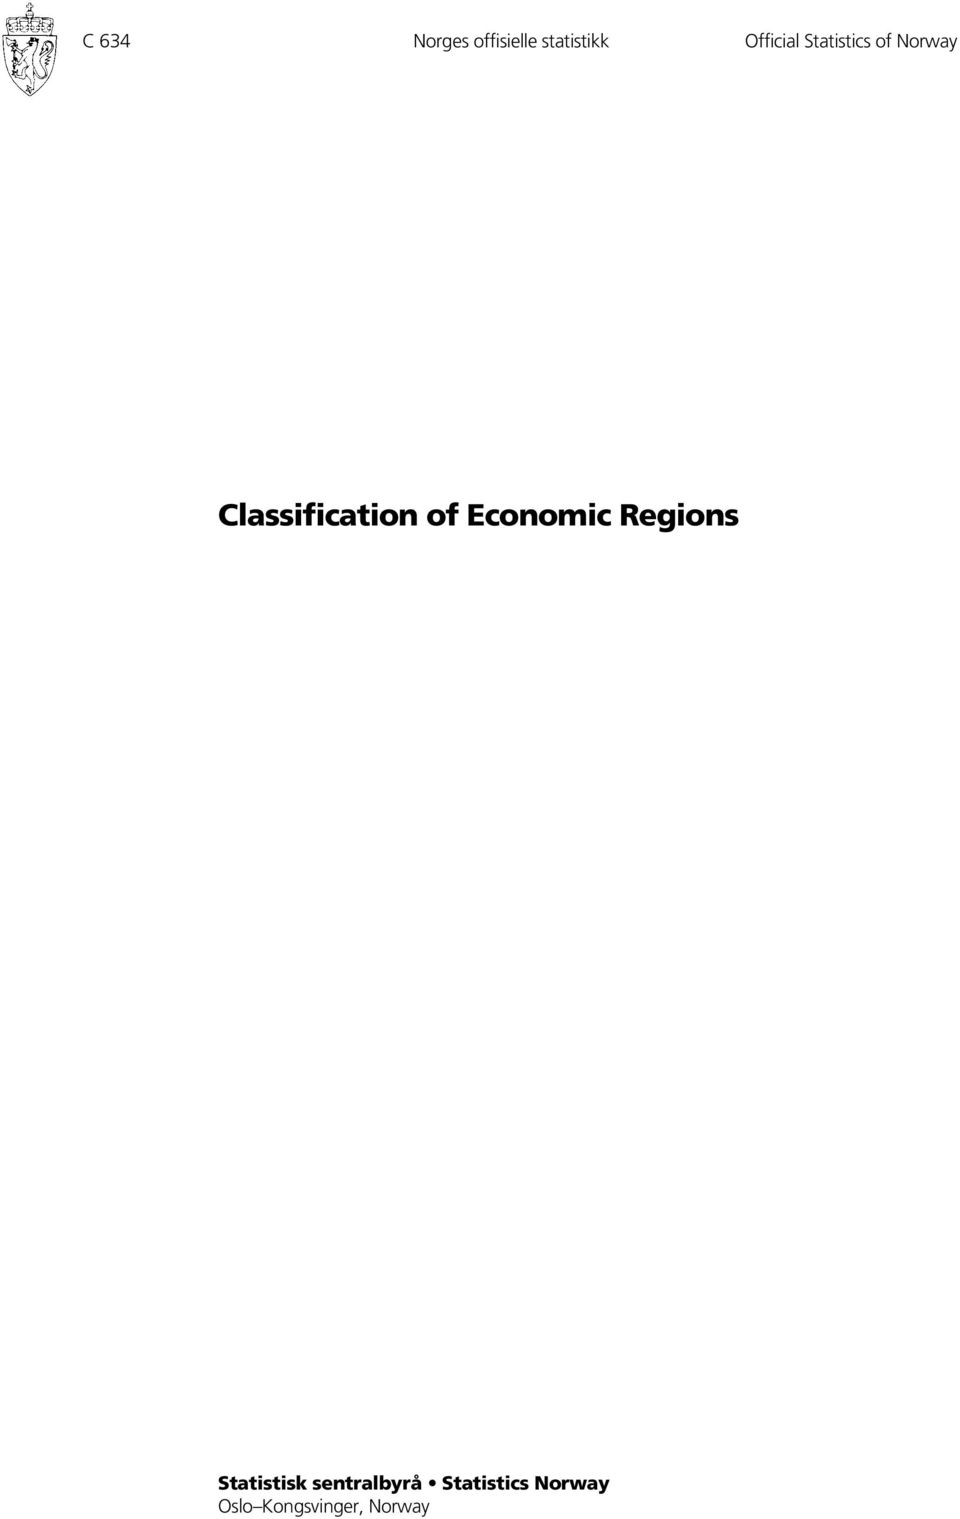 Classification of Economic Regions